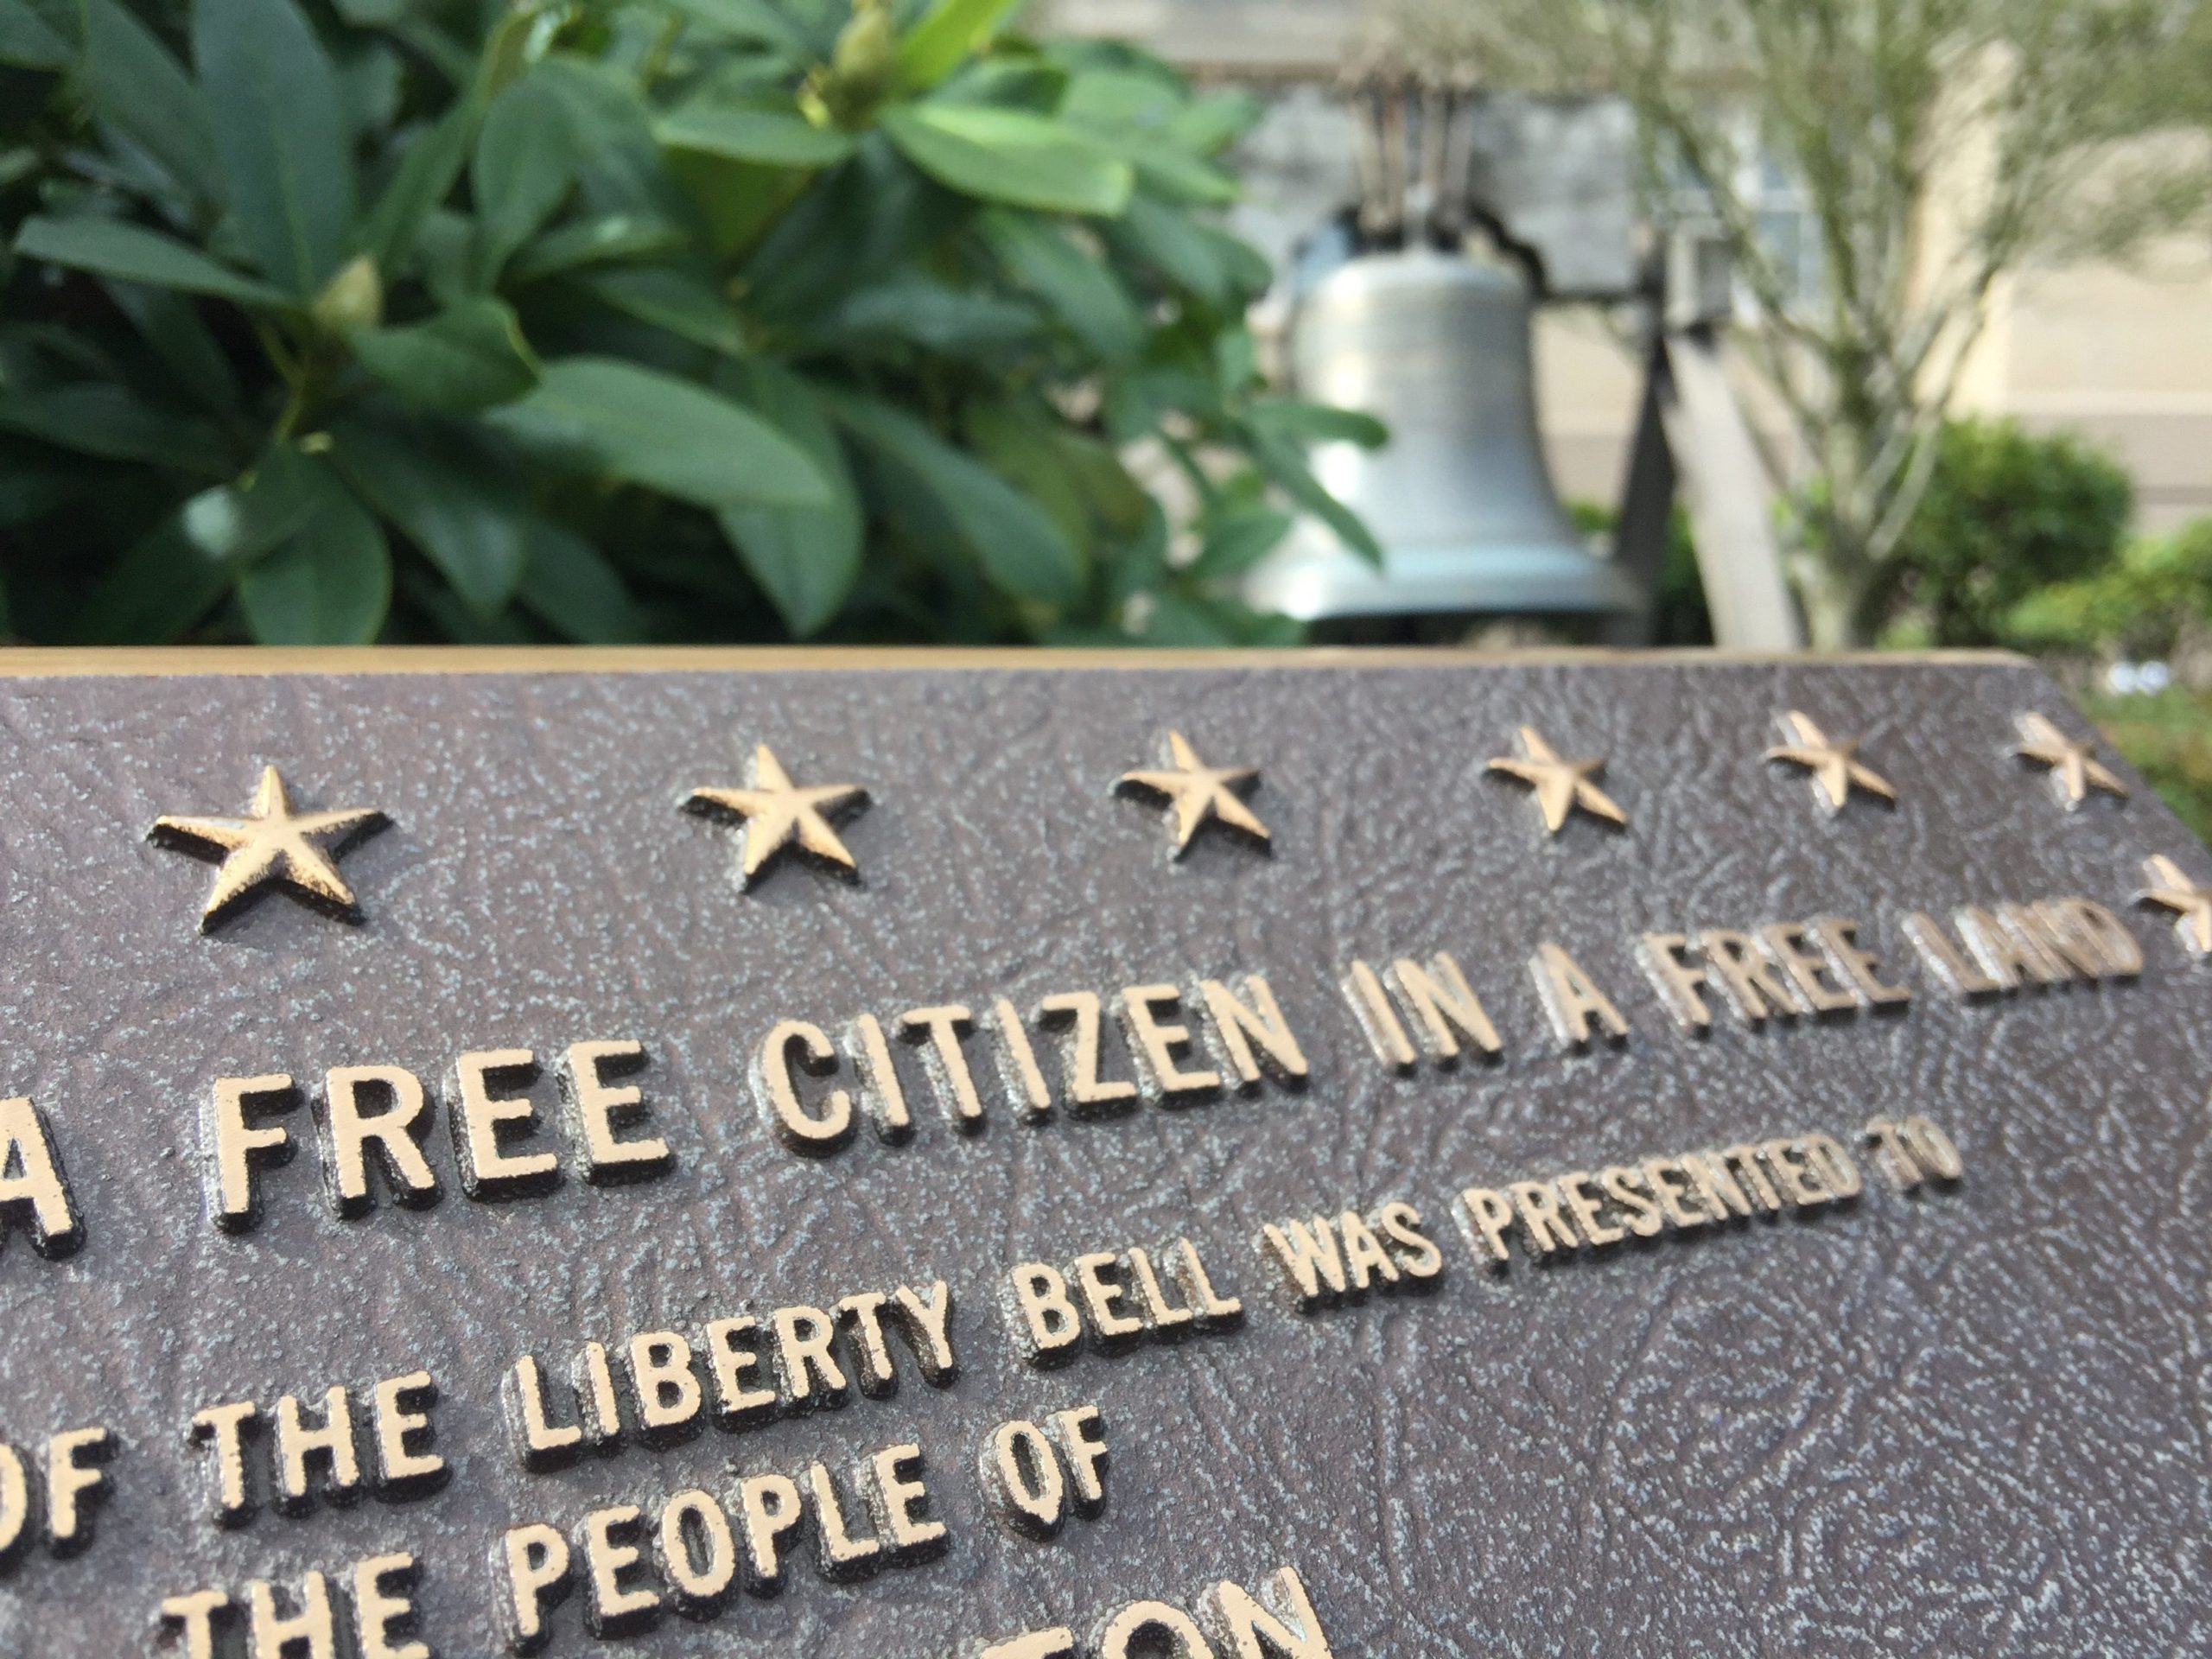 The 57 US Treasury Liberty Bells